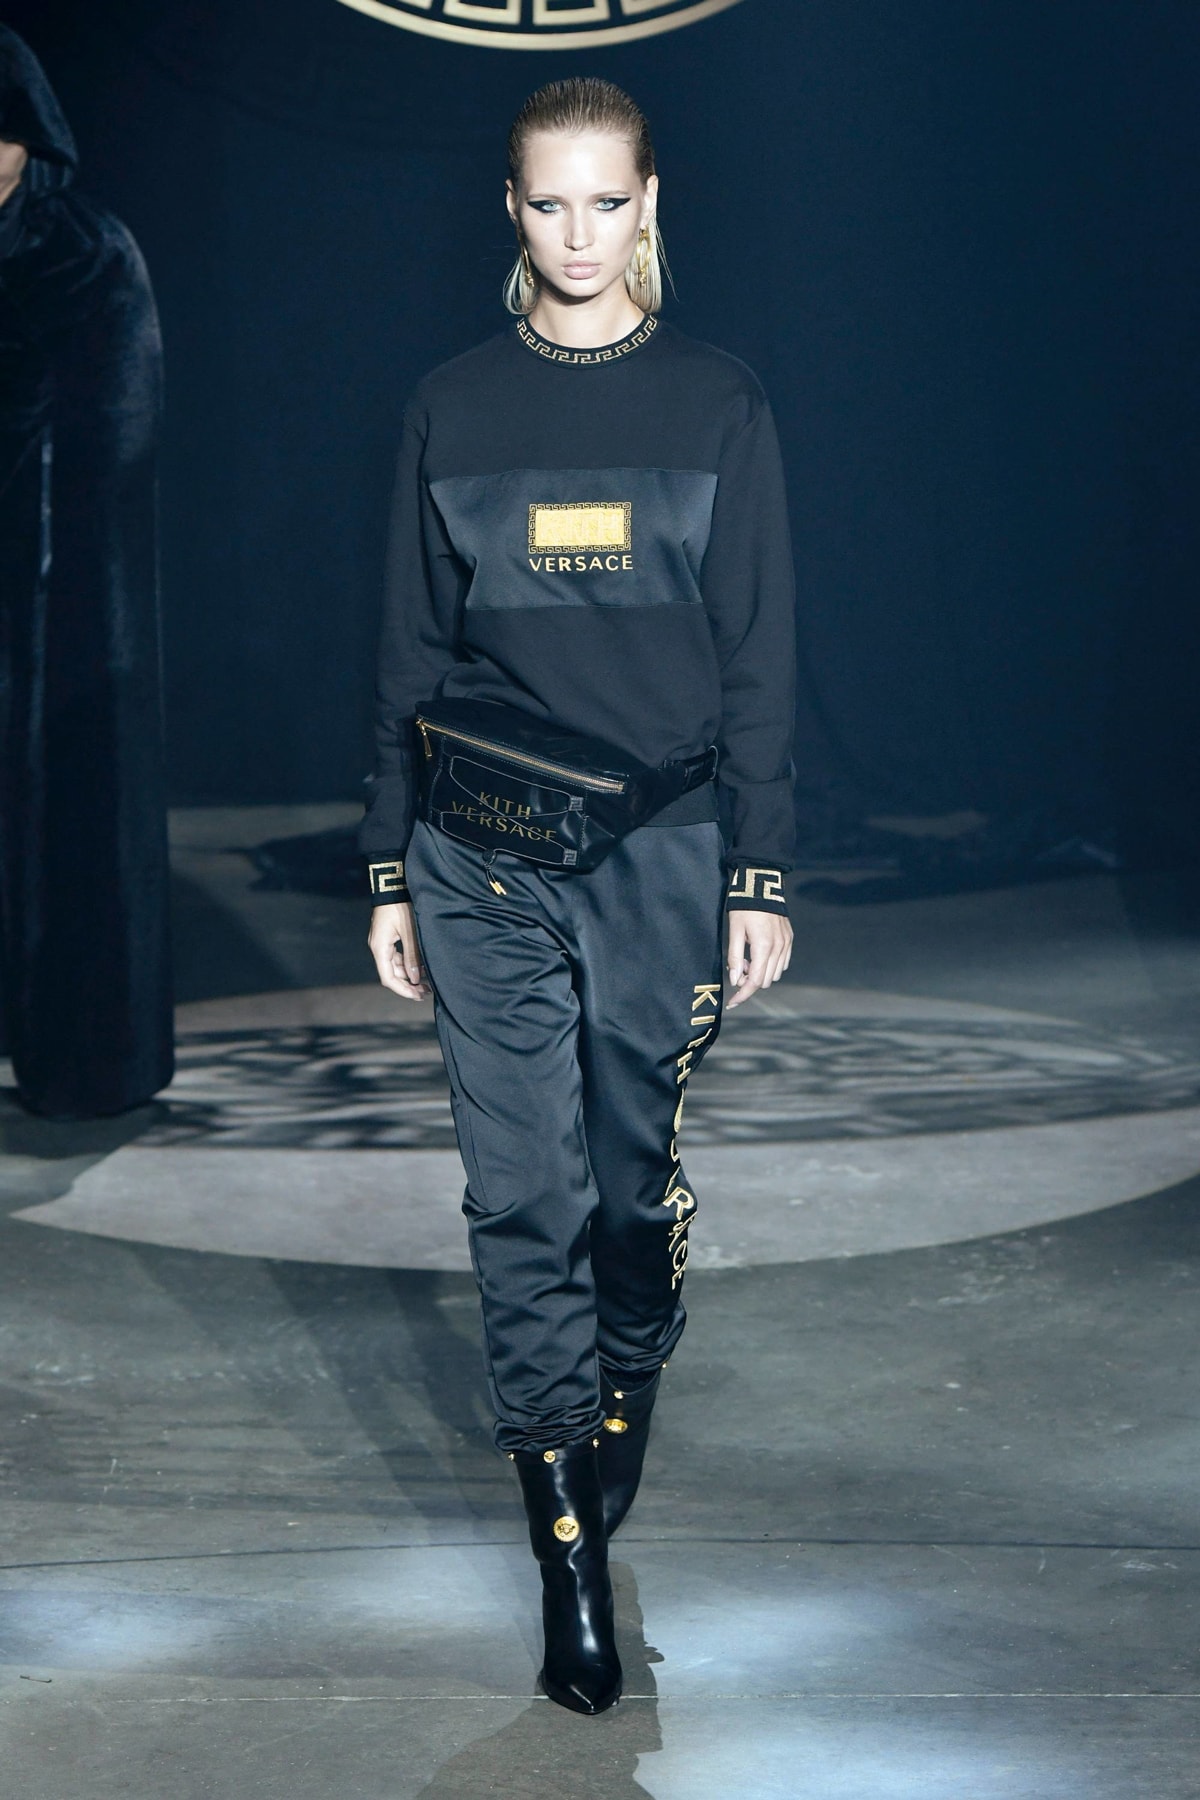 KITH 2018 Fall Winter NYFW New York Fashion Week Versace Crewneck Sweater Sweatpants Black